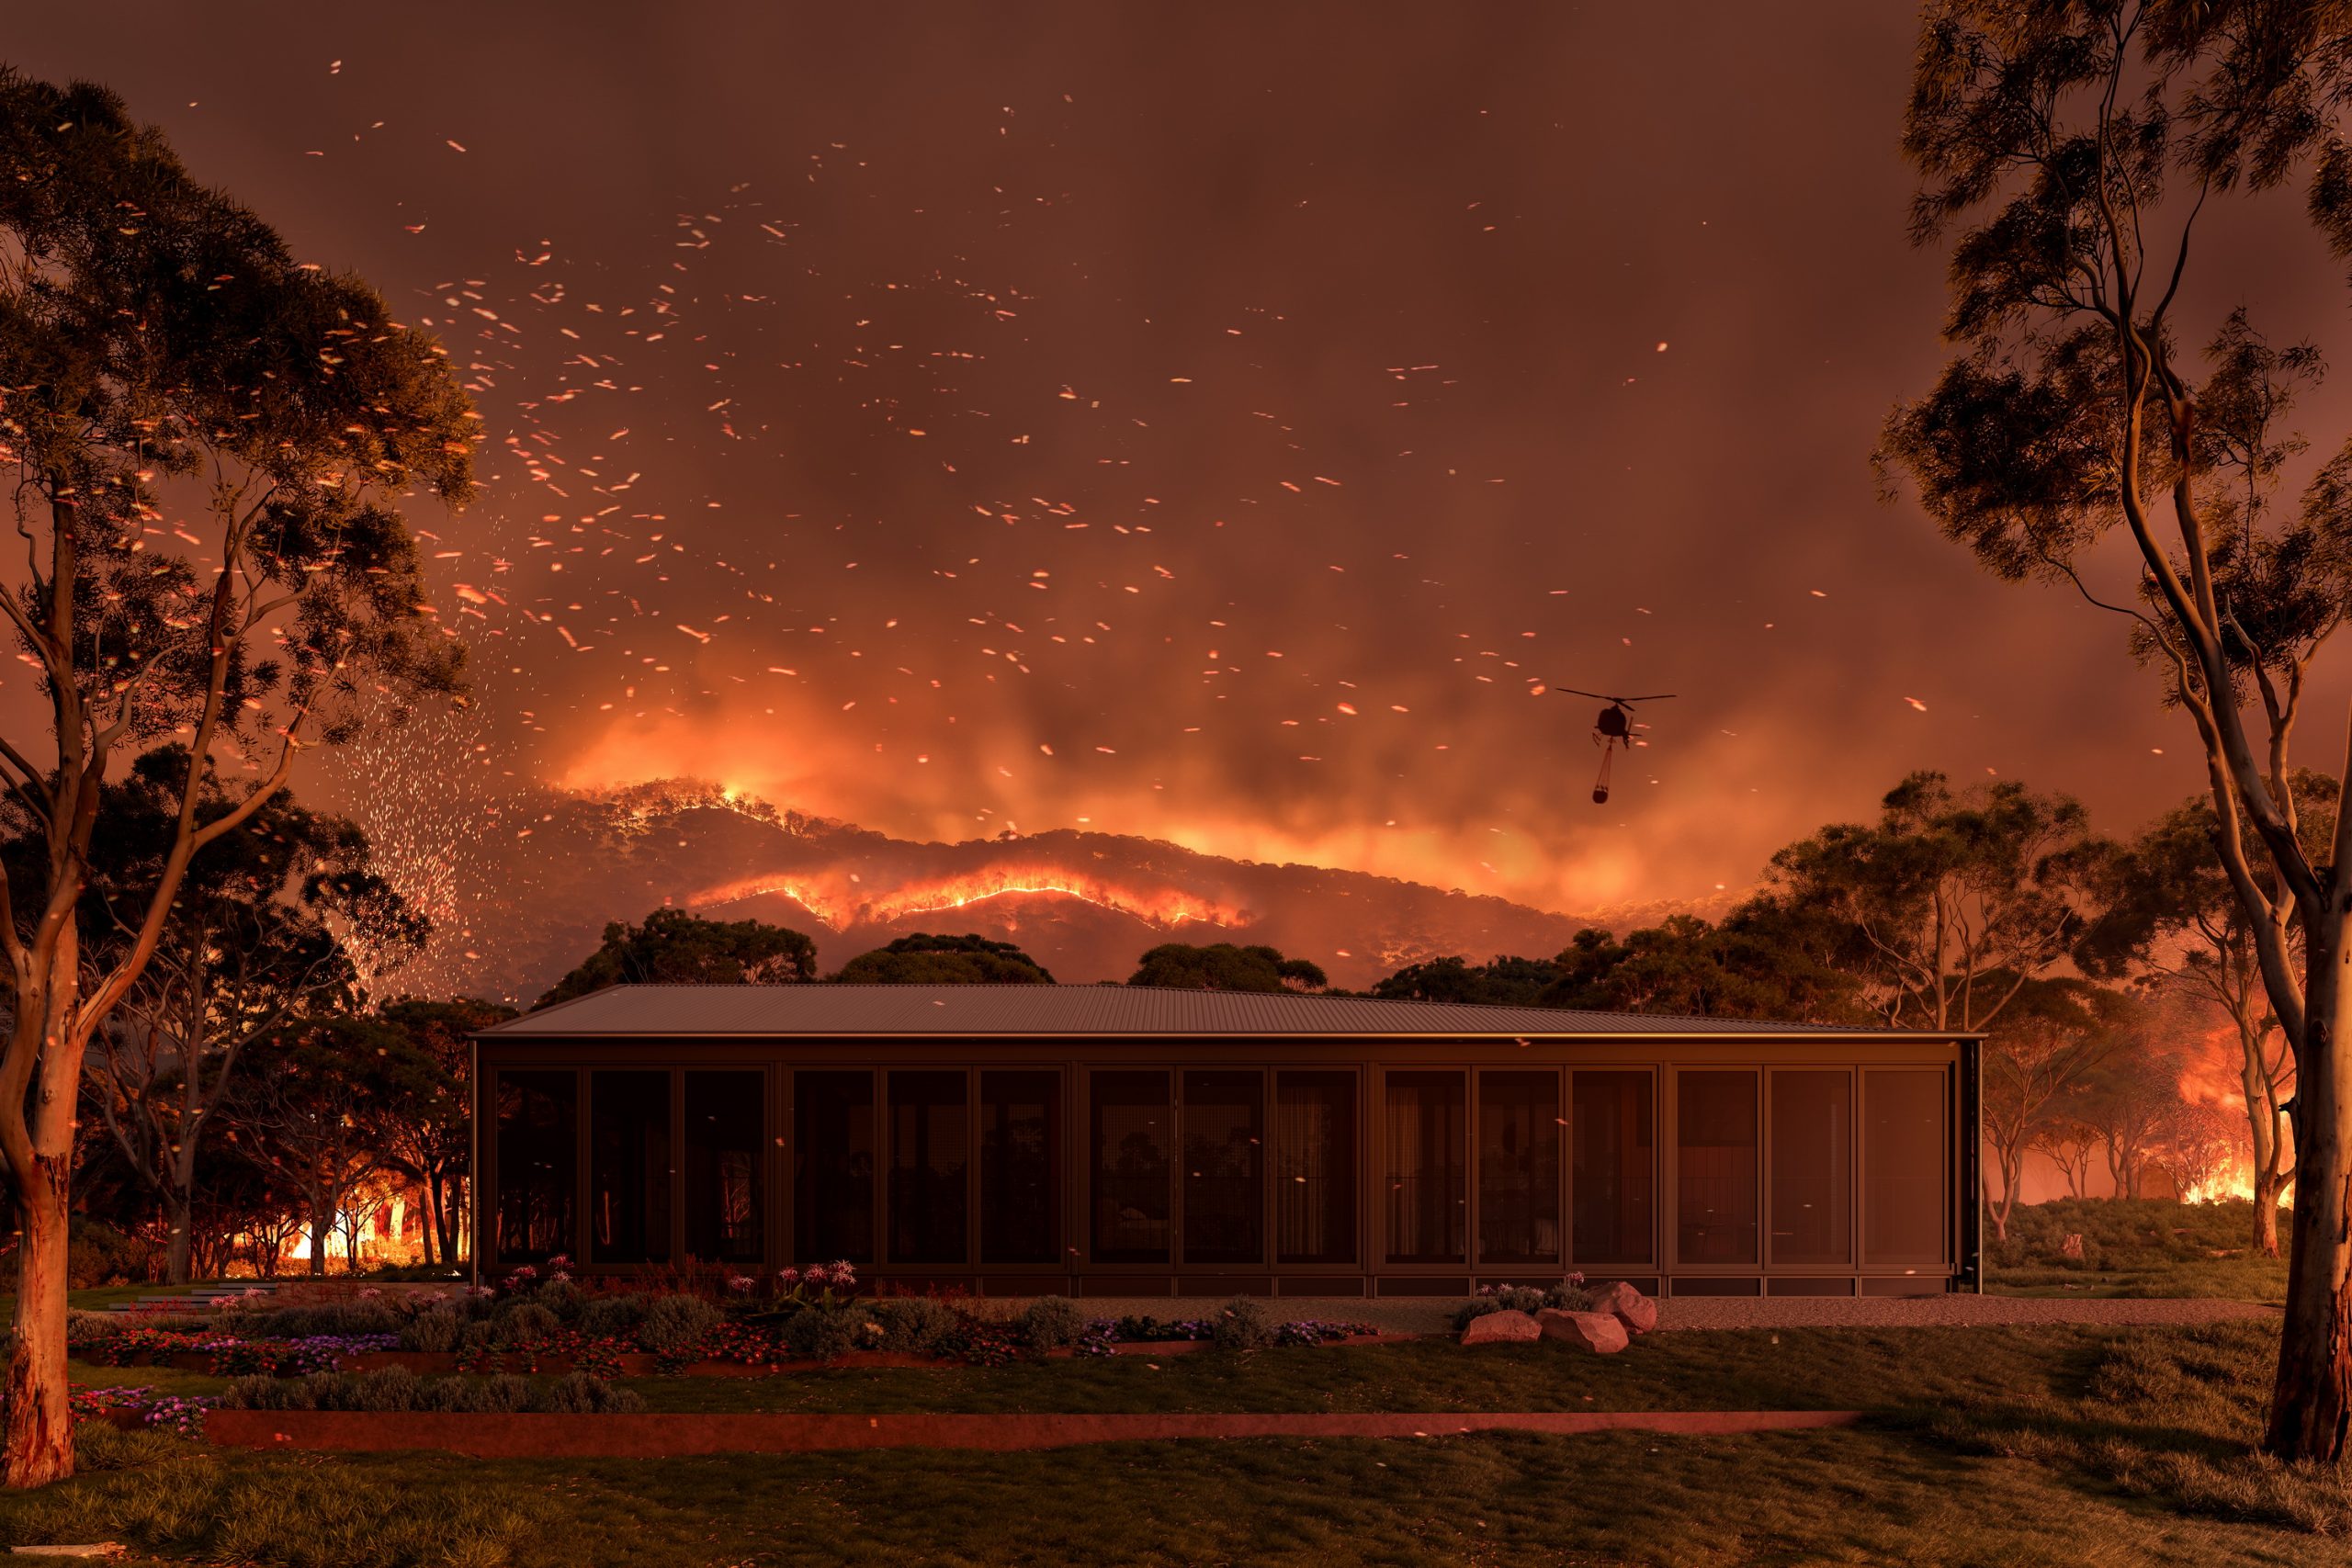 Fortis-house-exterior-image-prefab-architecture-clear-day-image-render-3d-visualisation-archviz-bushfire